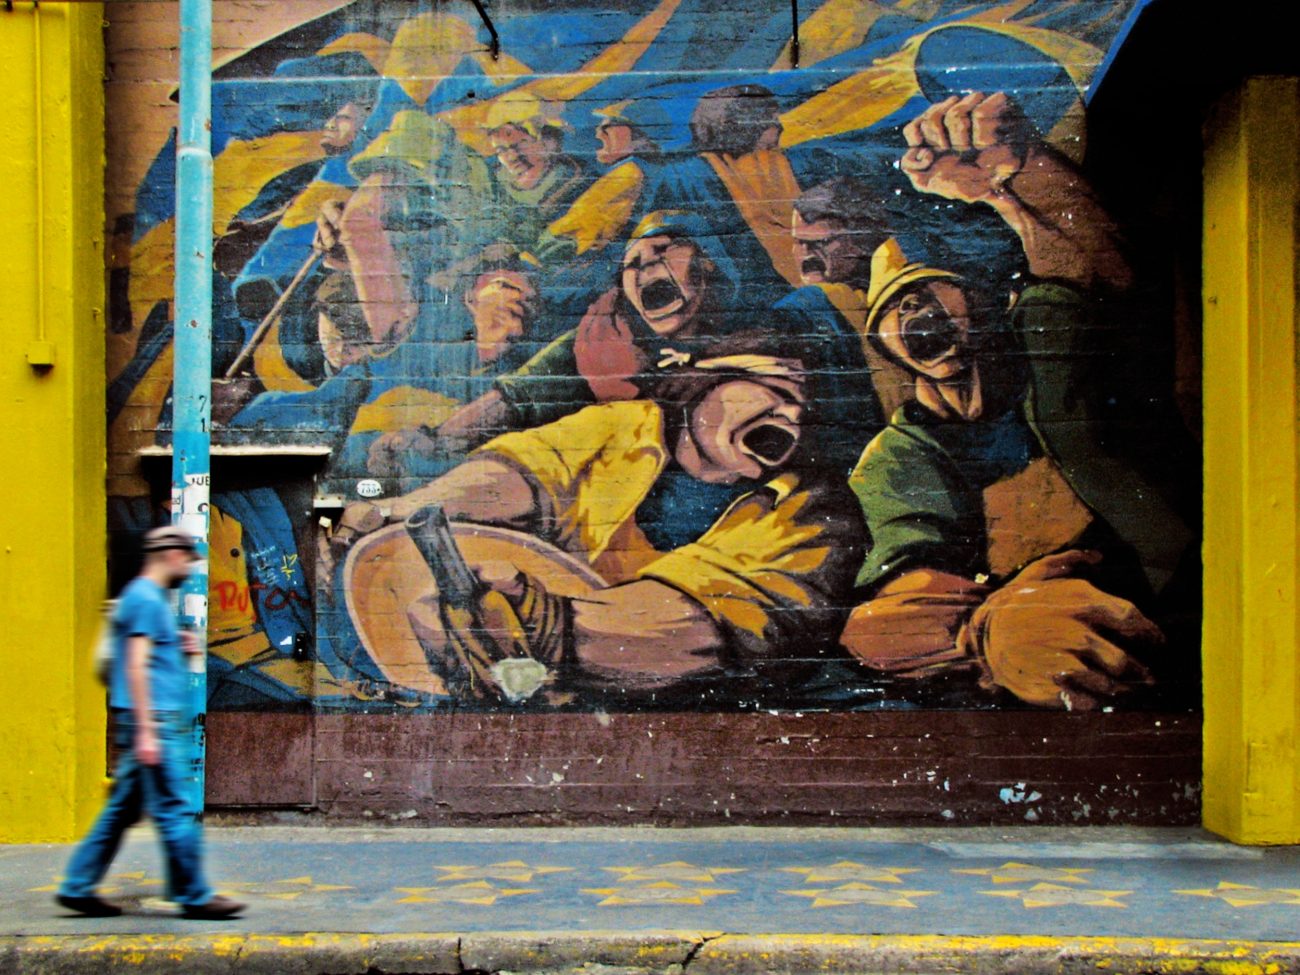 Street art in La Boca, Buenos Aires, Argentina